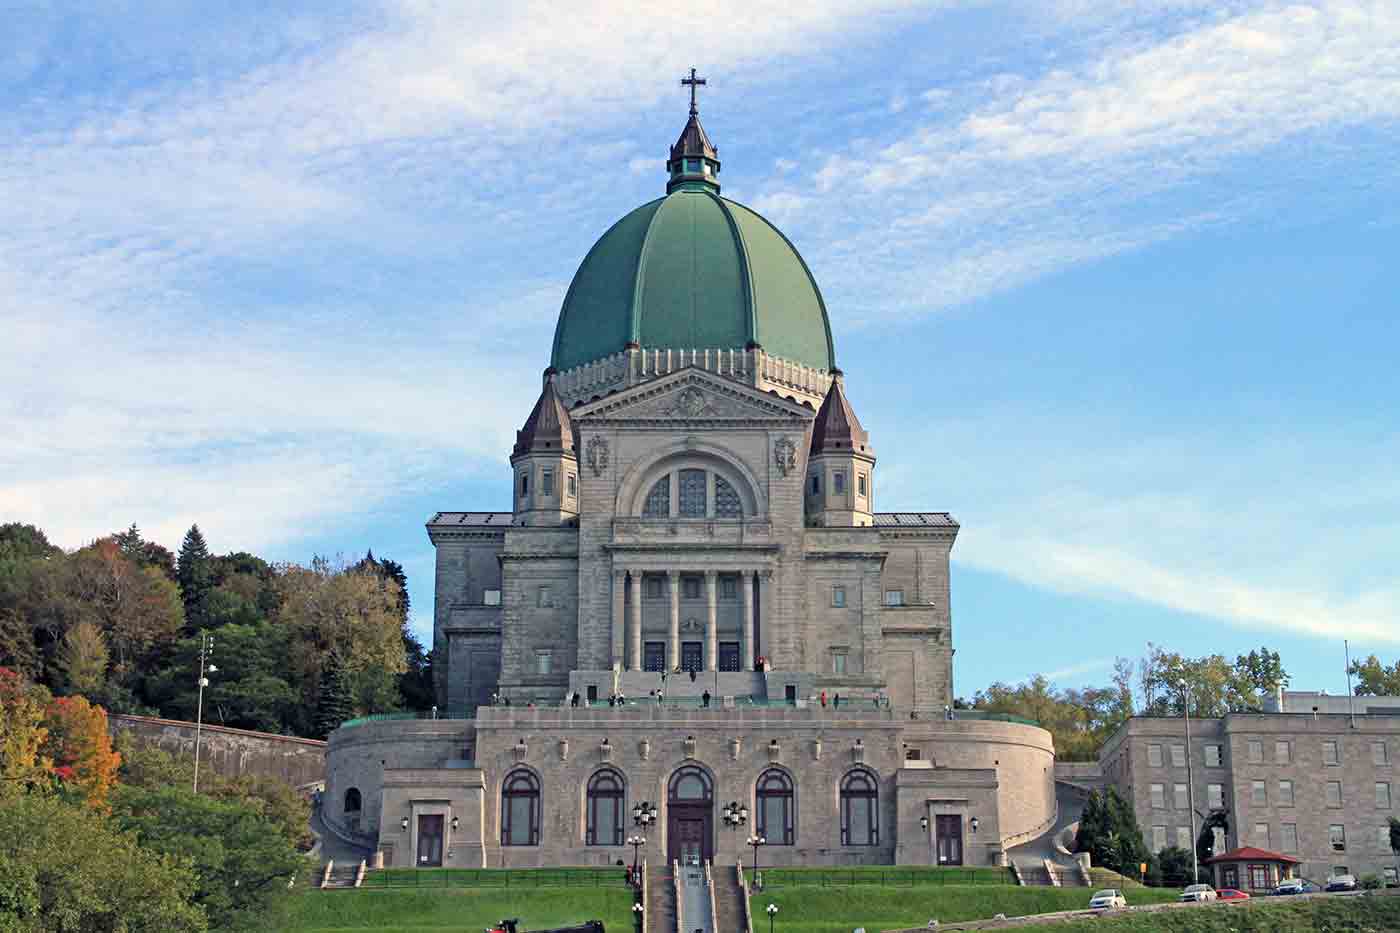 Saint Joseph's Oratory of Mount Royal